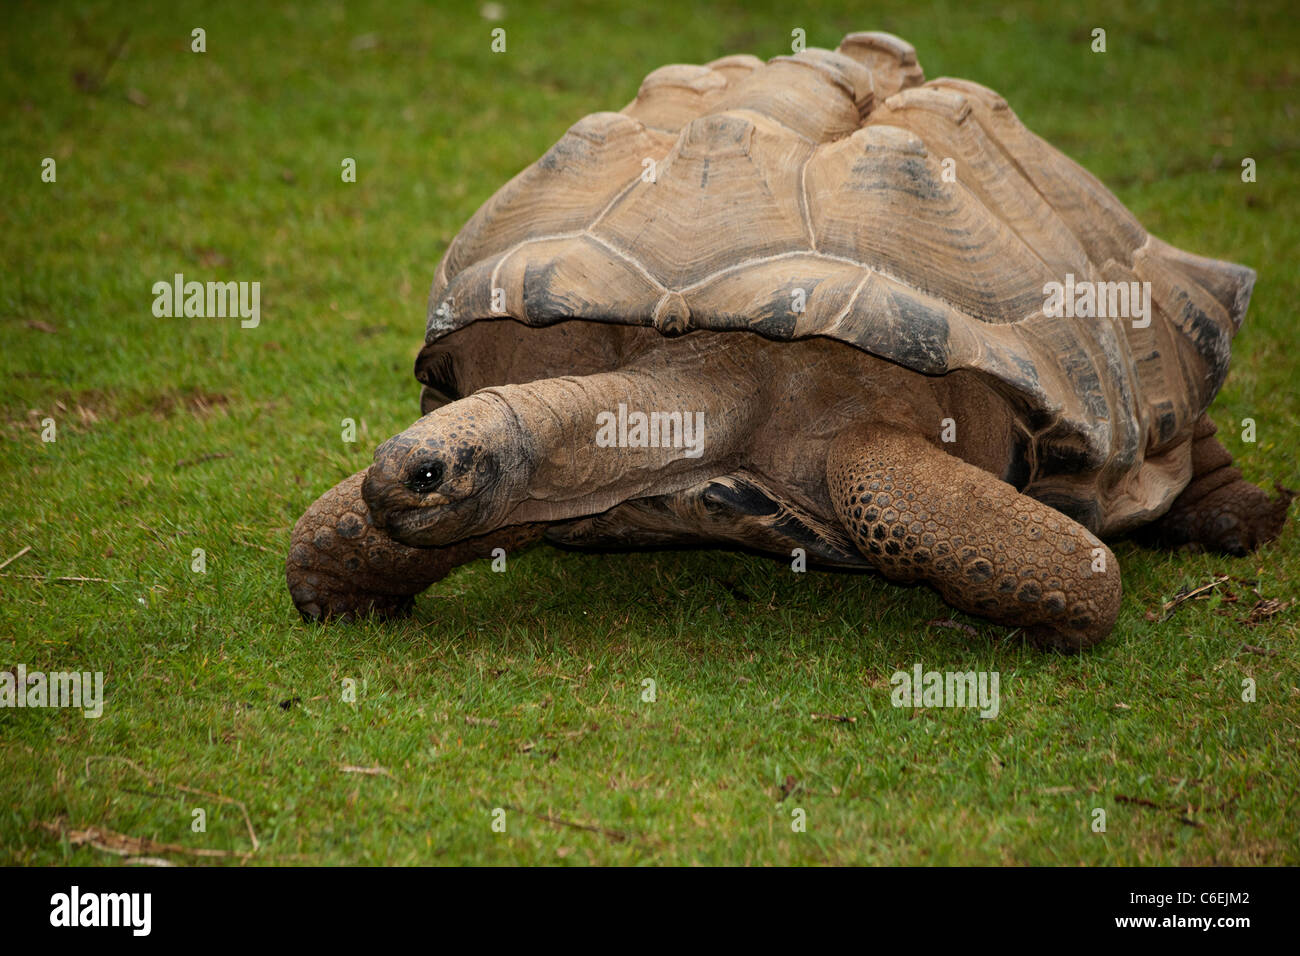 Tortue d'Aldabra (Aldabrachelys gigantea) Banque D'Images